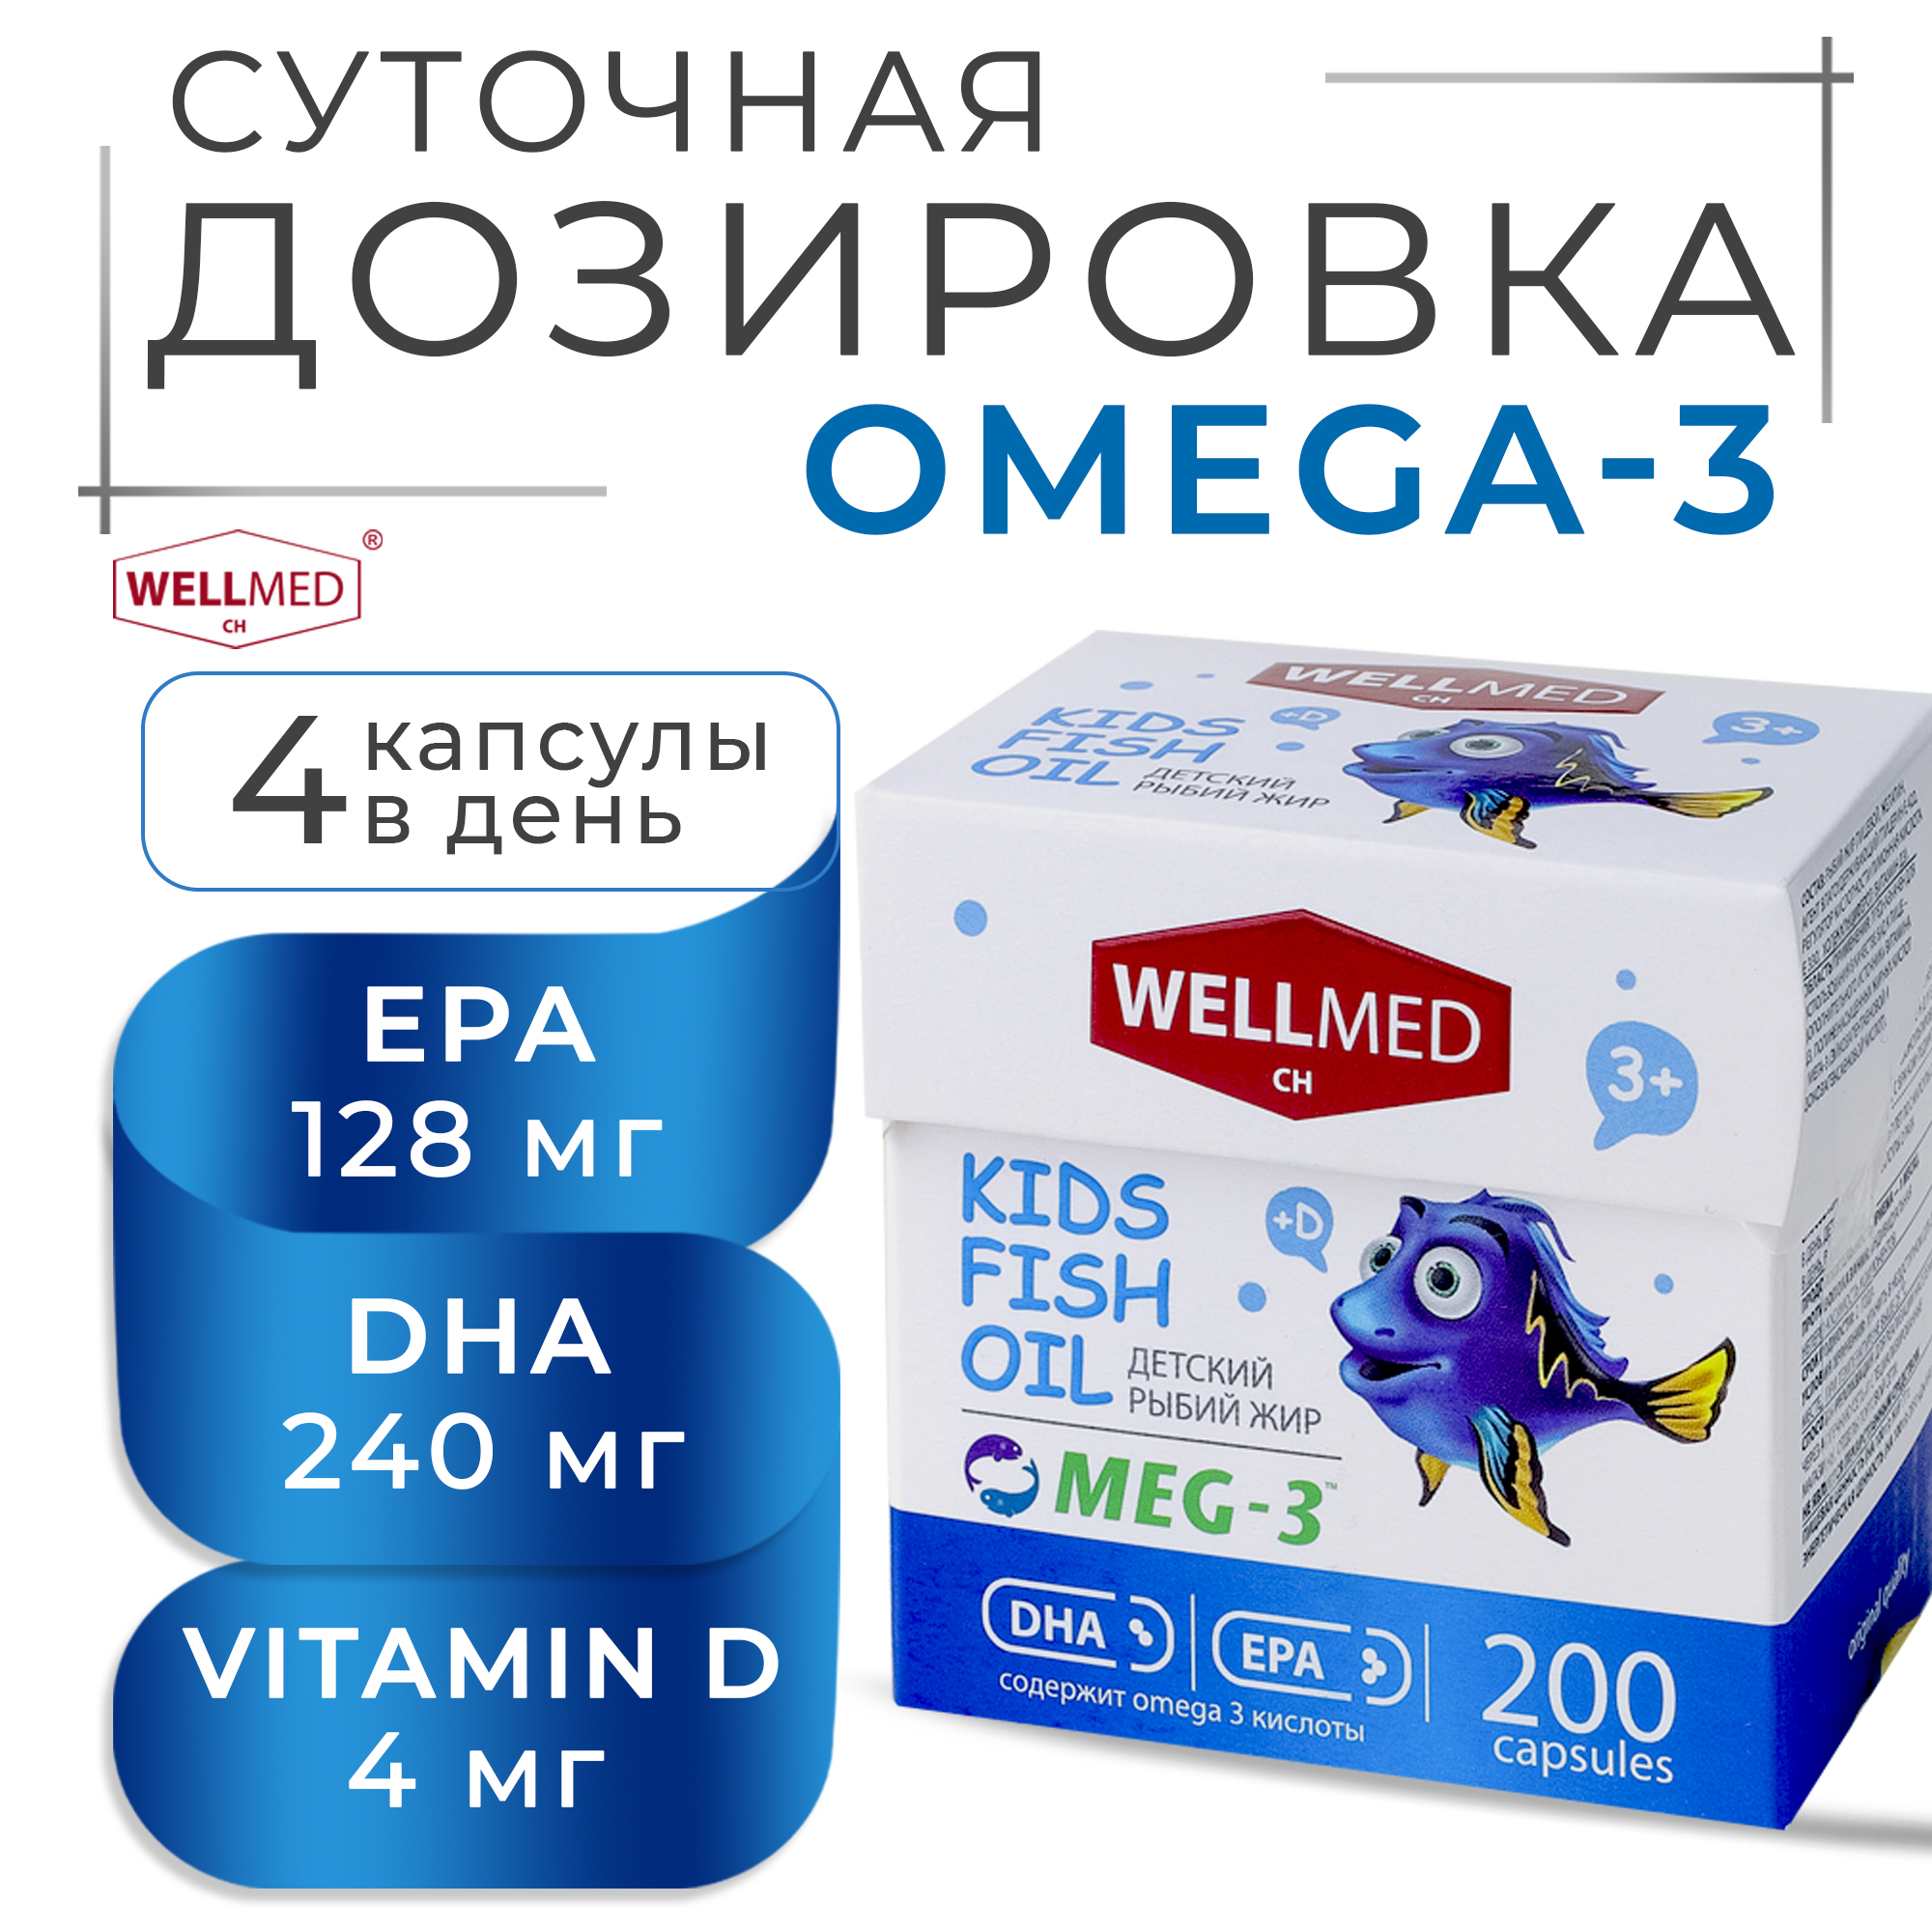 Концентрат OMEGA 3 для детей WELLMED Детский рыбий жир с витамином Д 200 капсул 3+ - фото 3